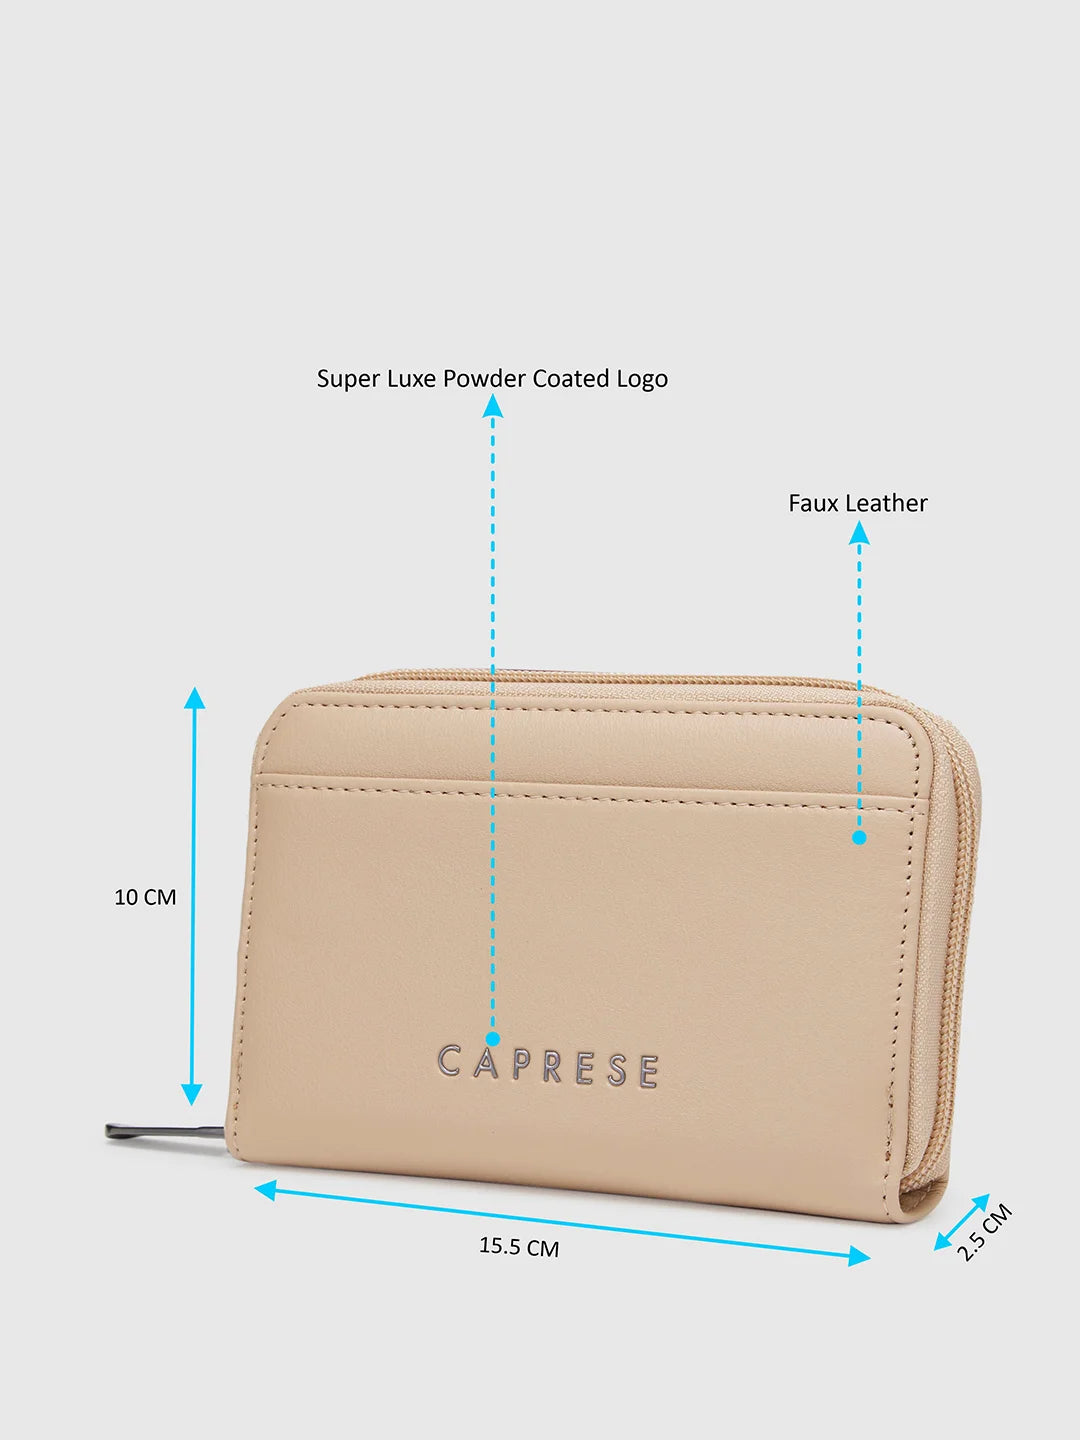 Buy Caprese Wallets & Card Holders online - Women - 203 products